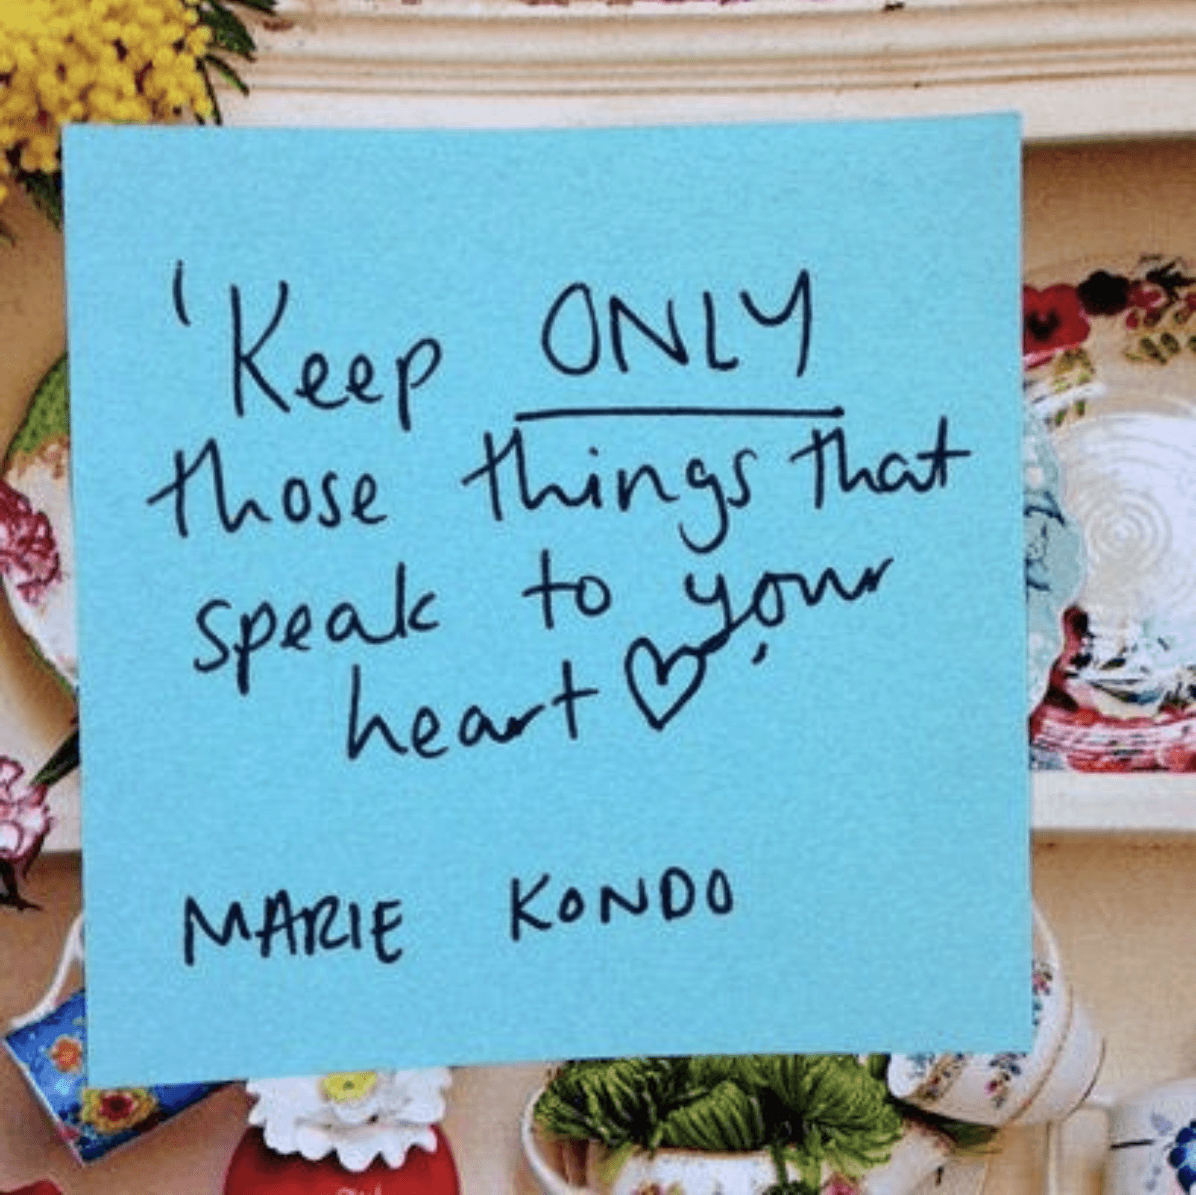 Speak to your heart